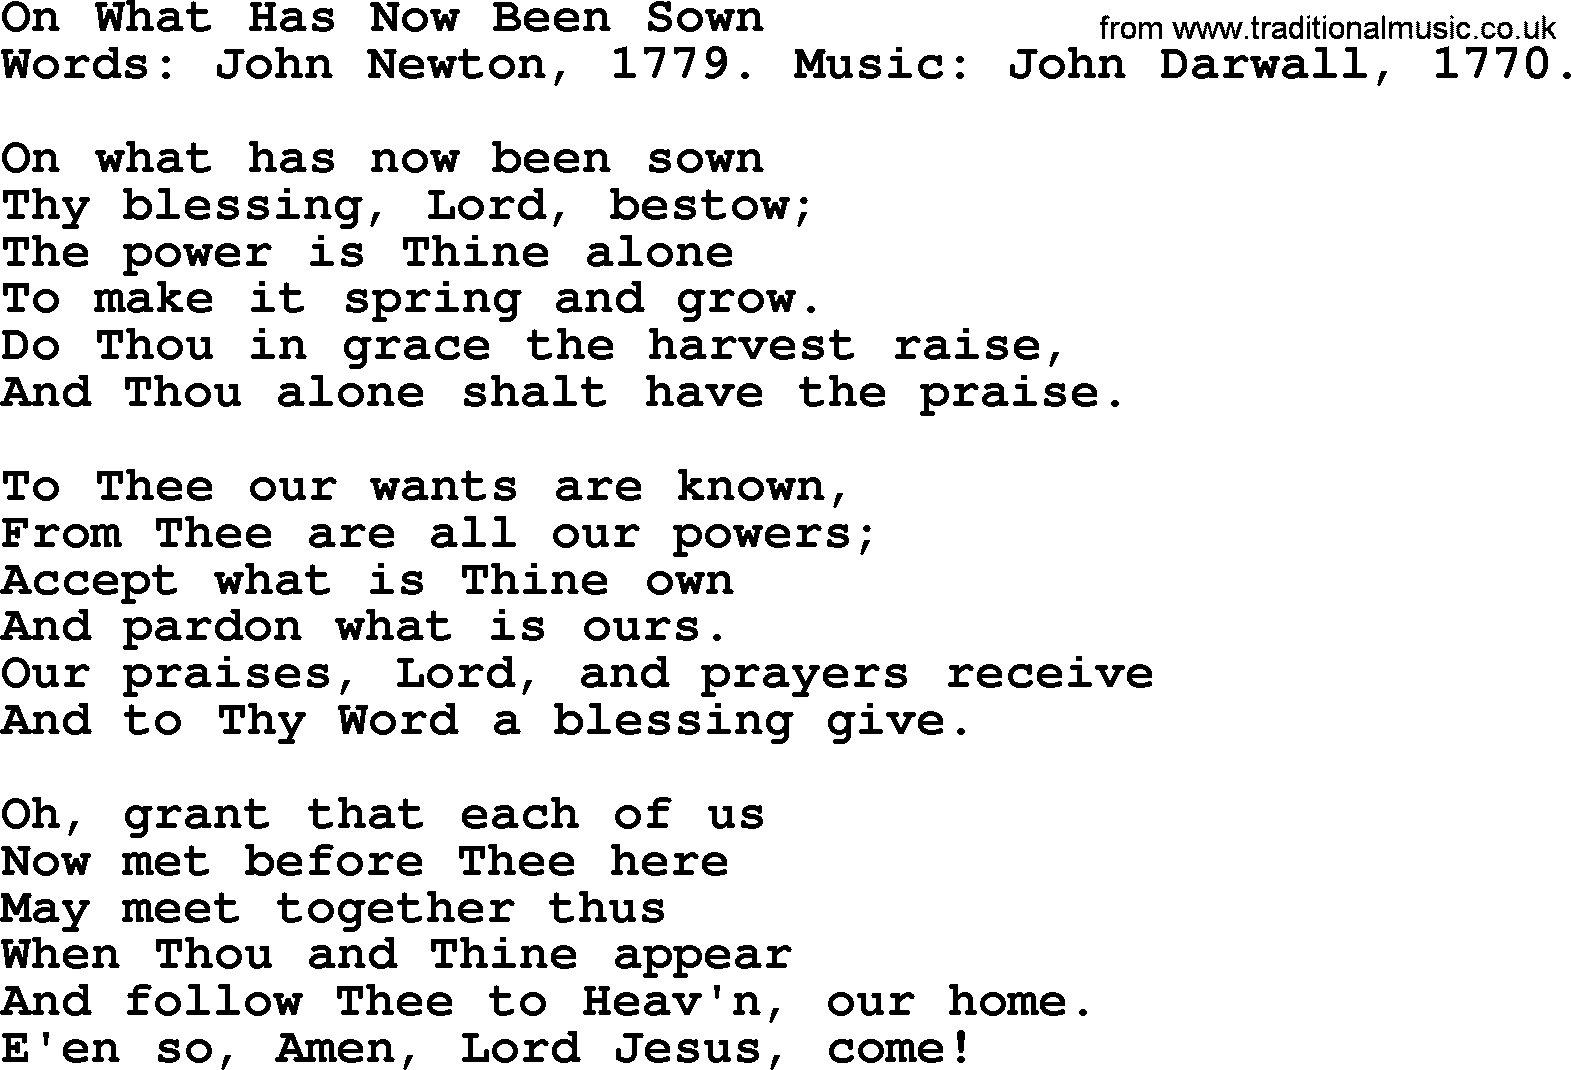 John Newton hymn: On What Has Now Been Sown, lyrics